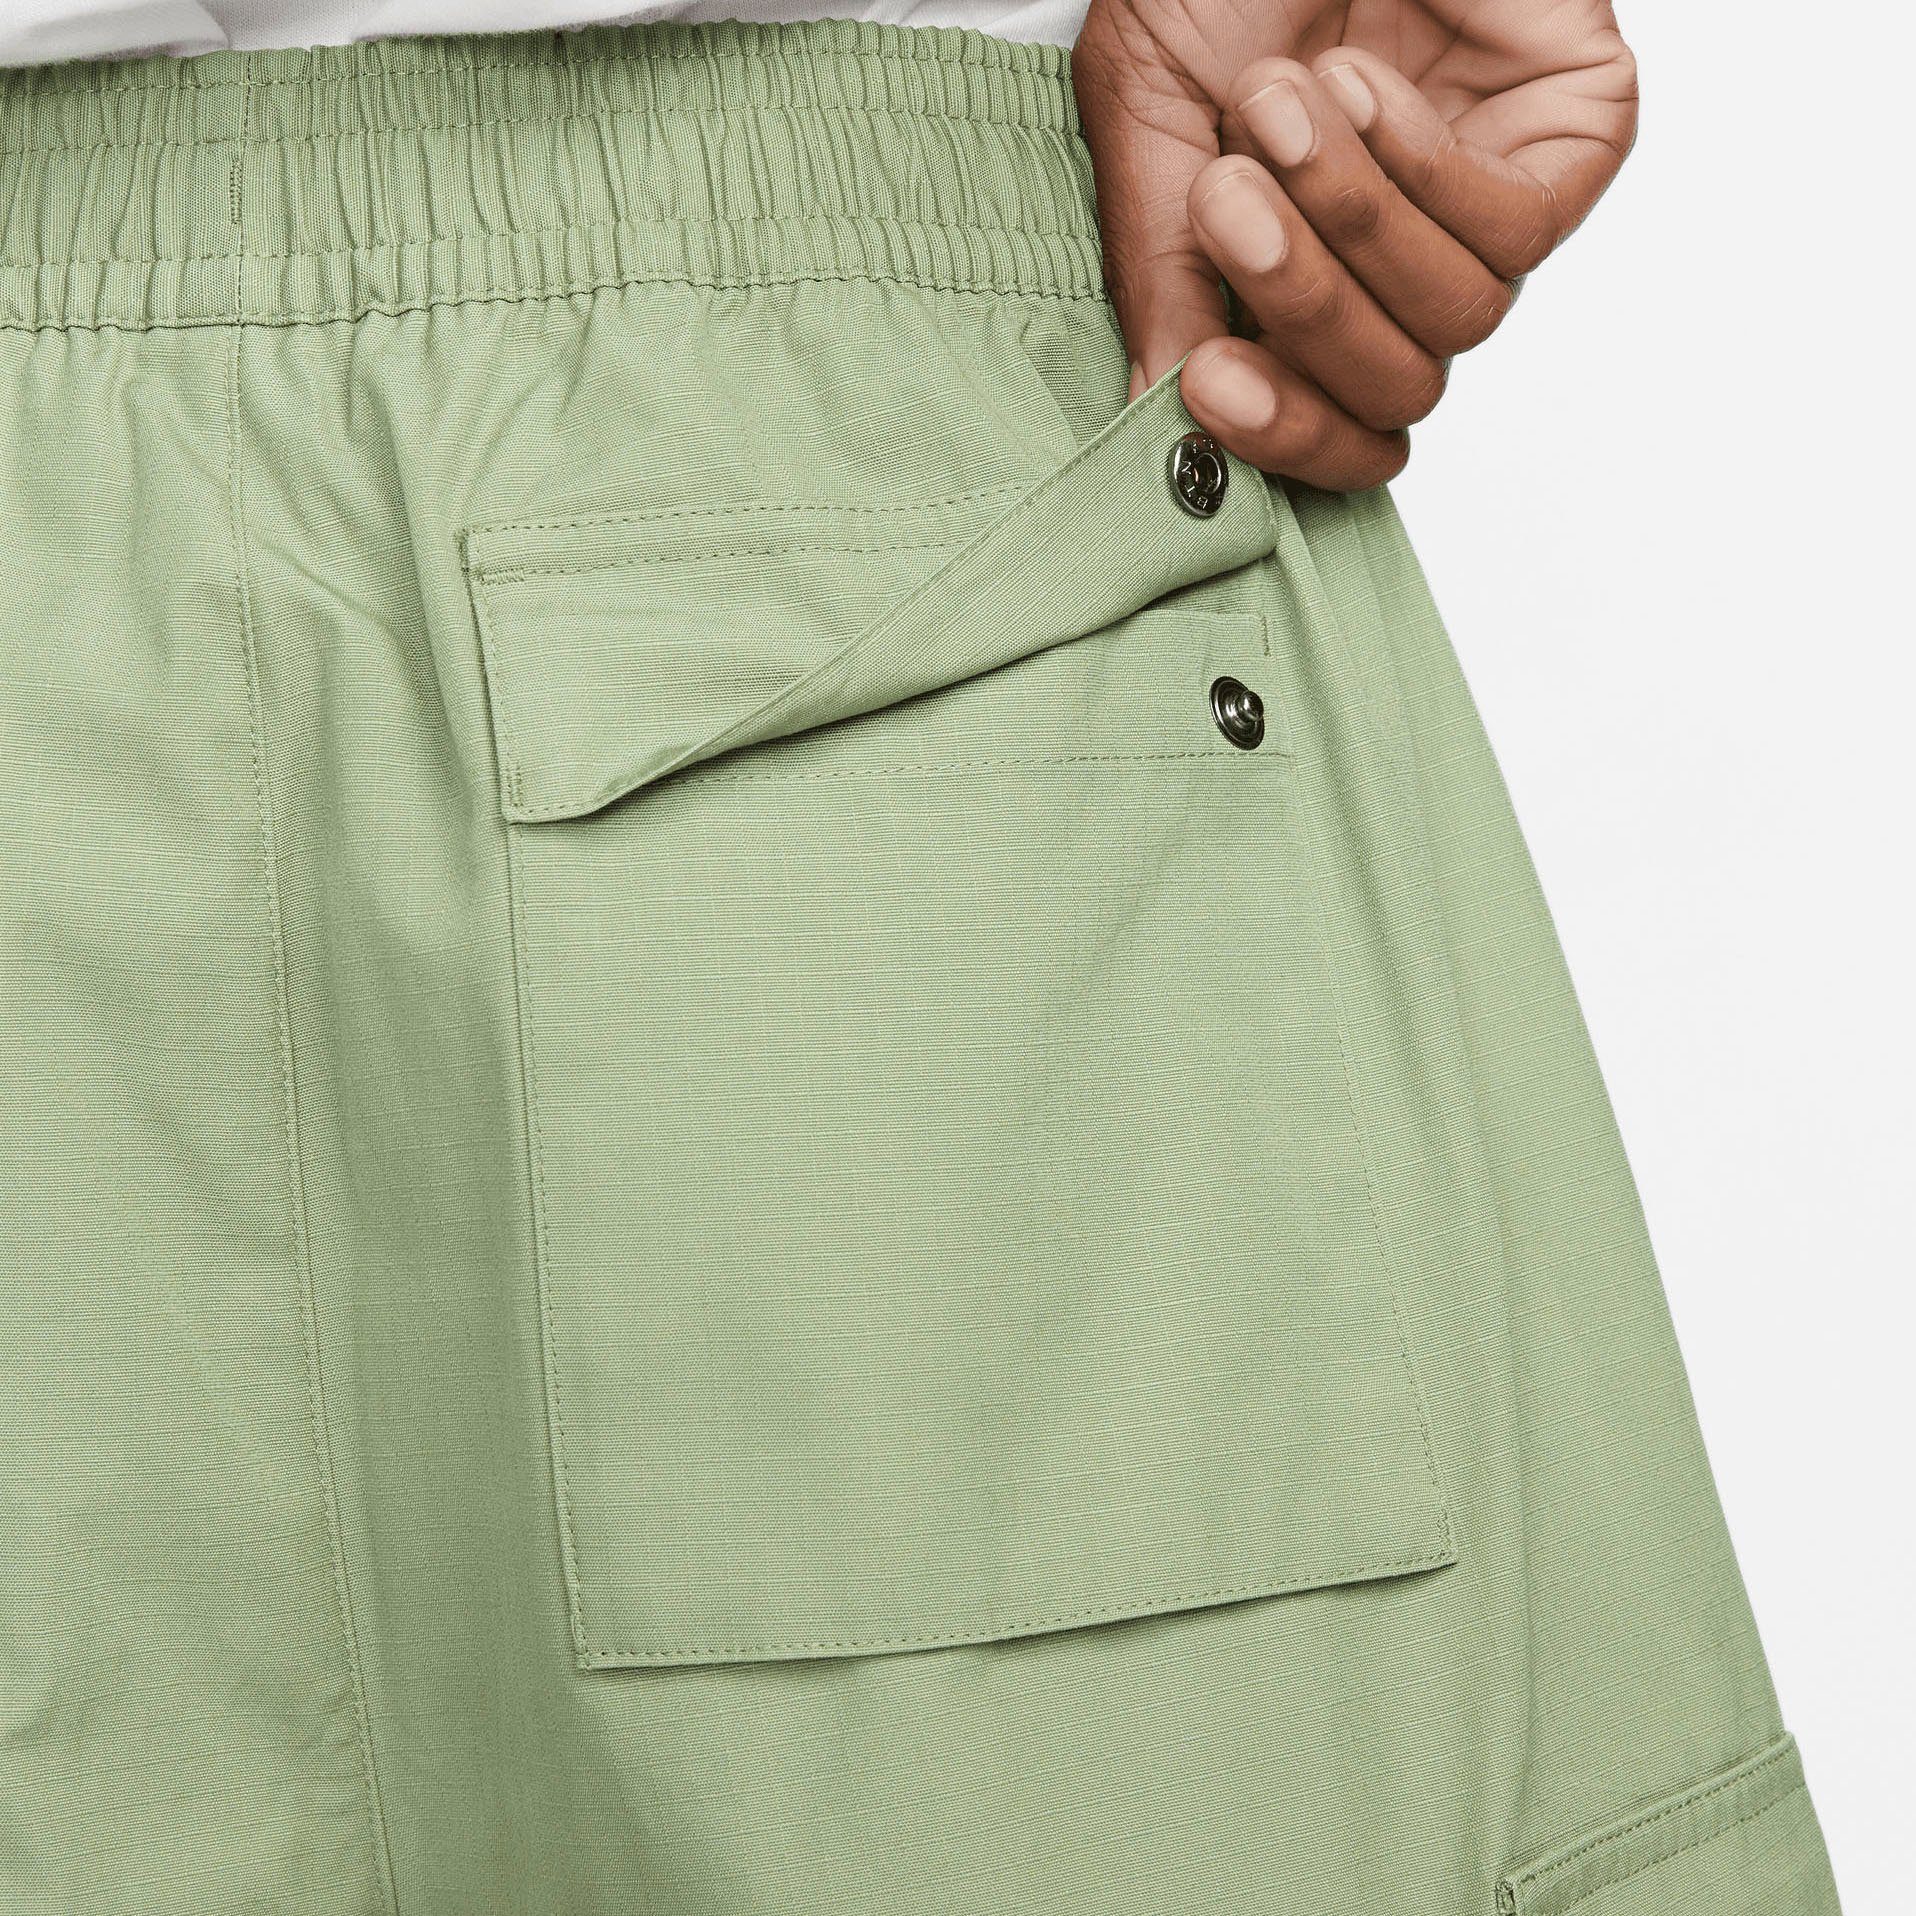 Nike Sportswear Shorts Club Fleece Shorts Cargo grün Men's